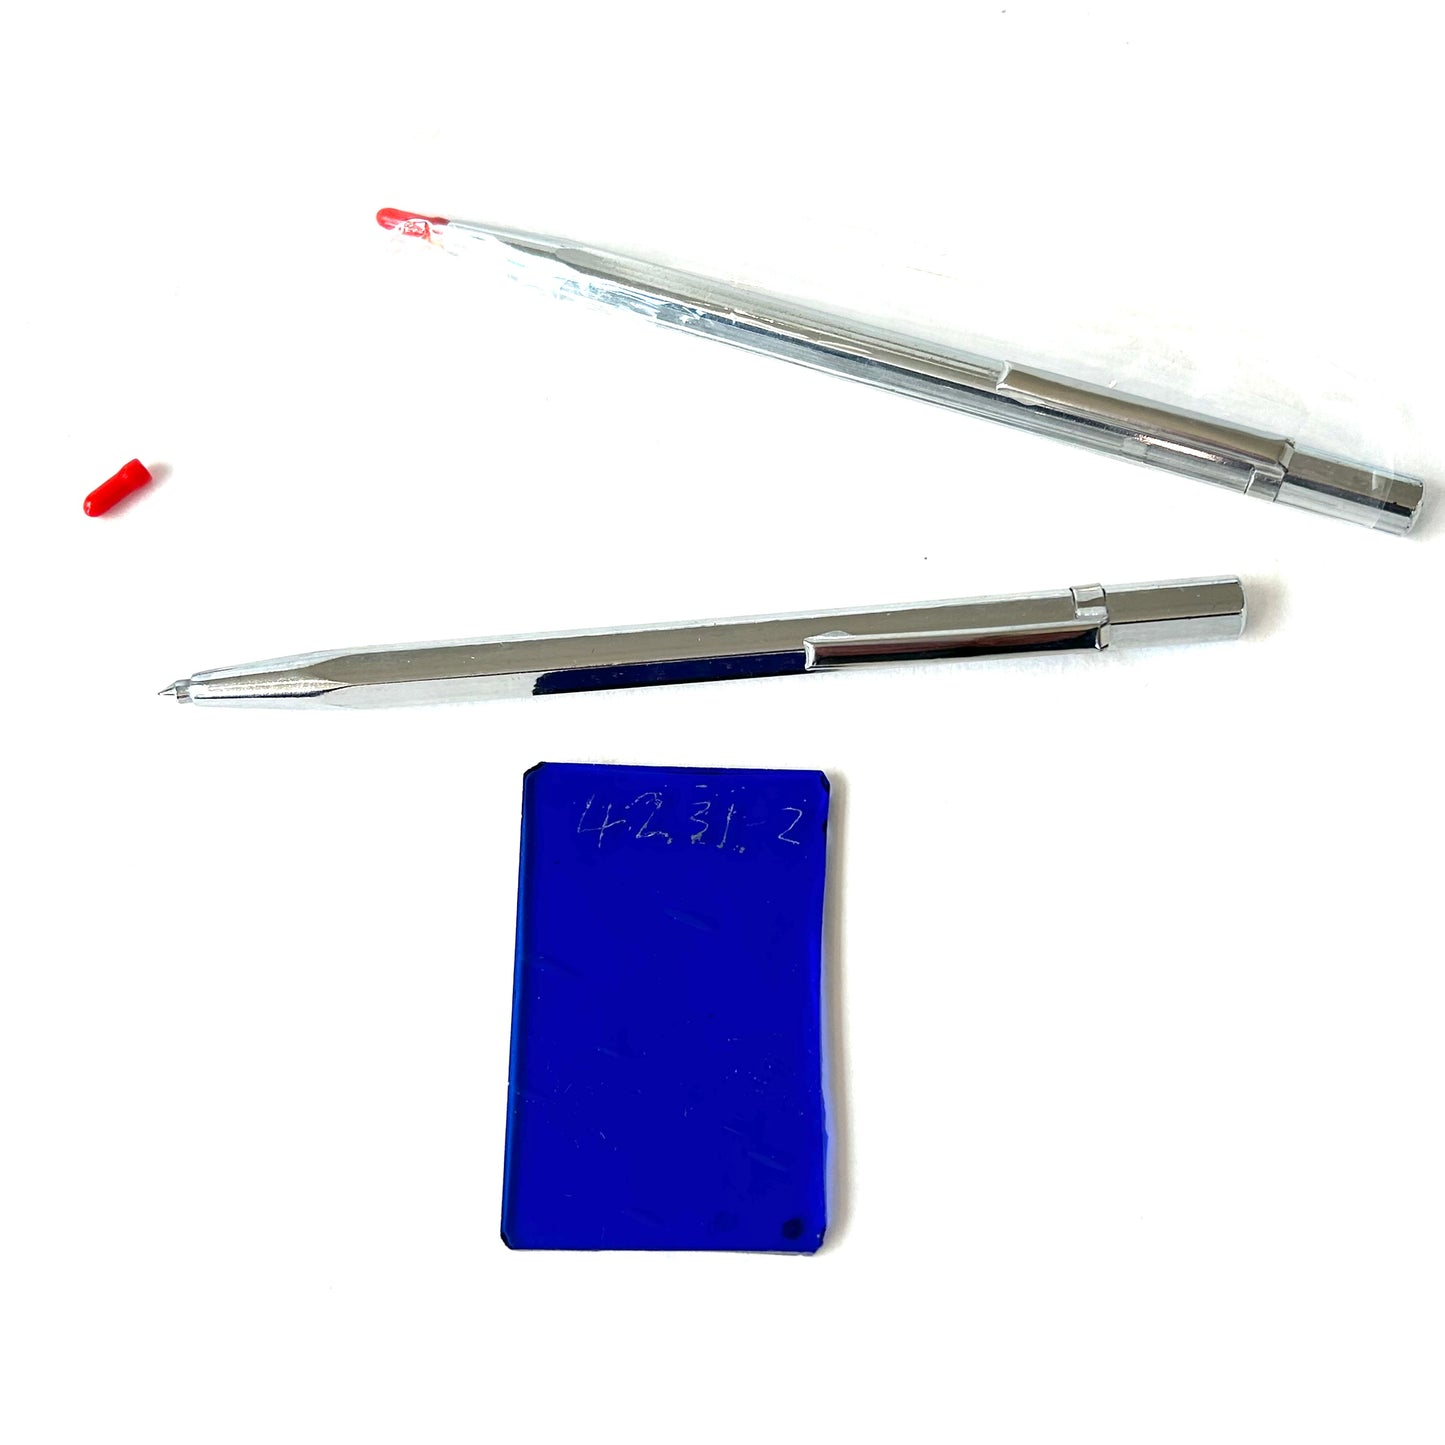 Engraving pen